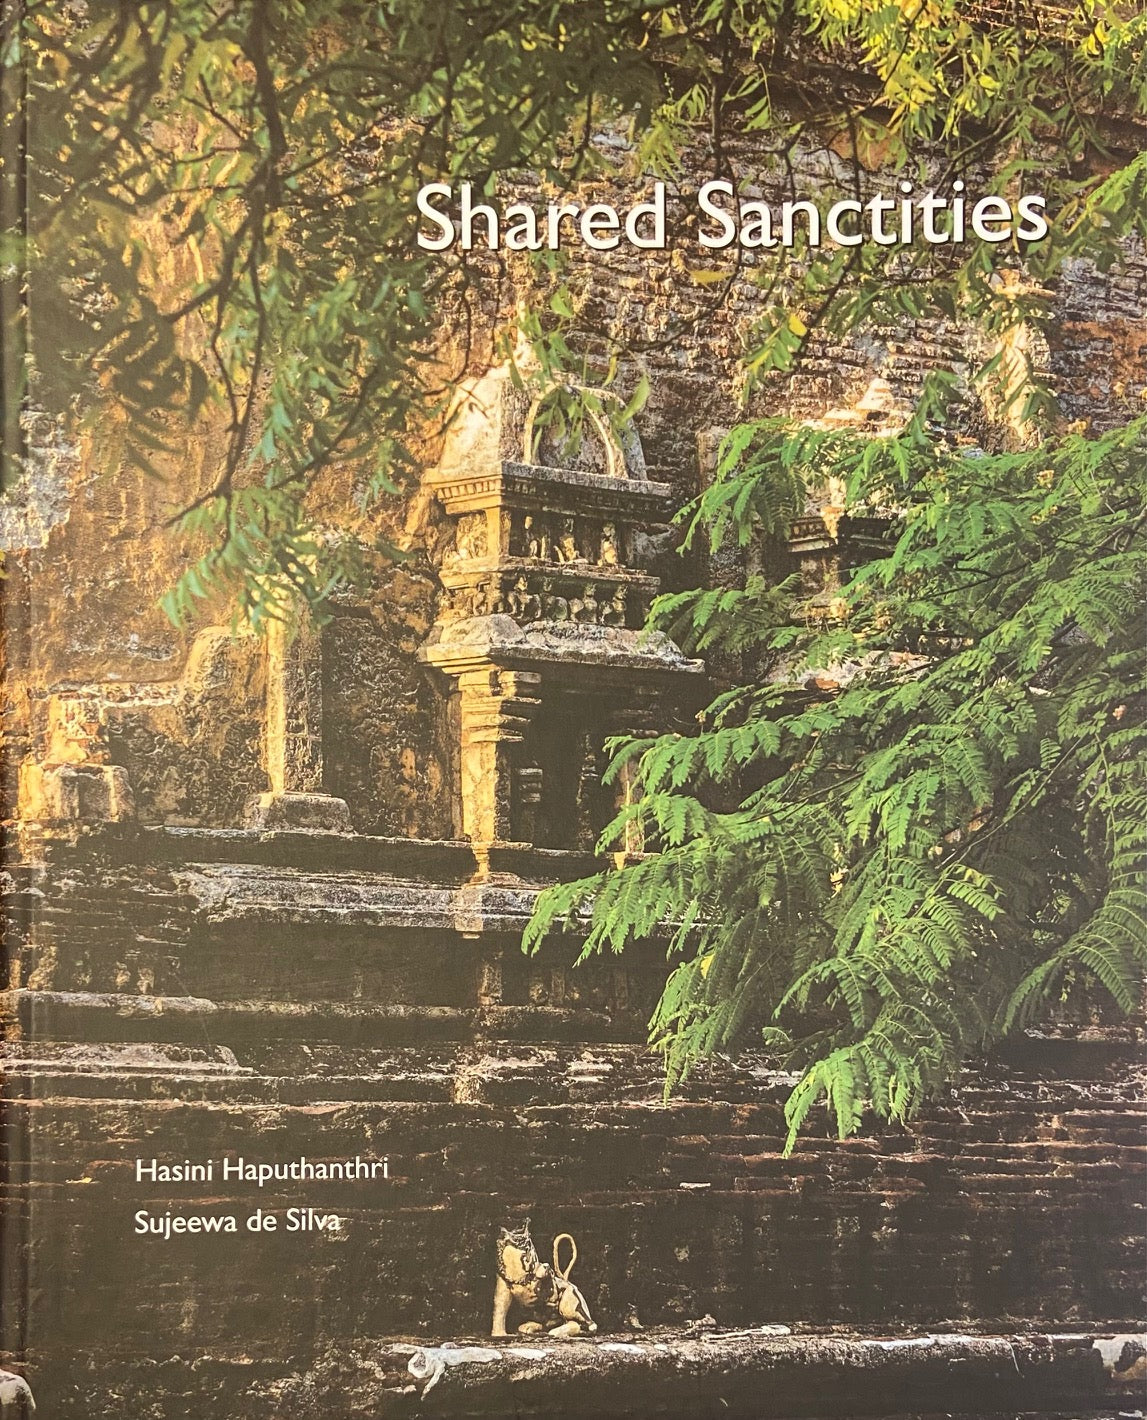 Shared Sanctities by Hasini Haputhanthri & Sujeewa de Silva